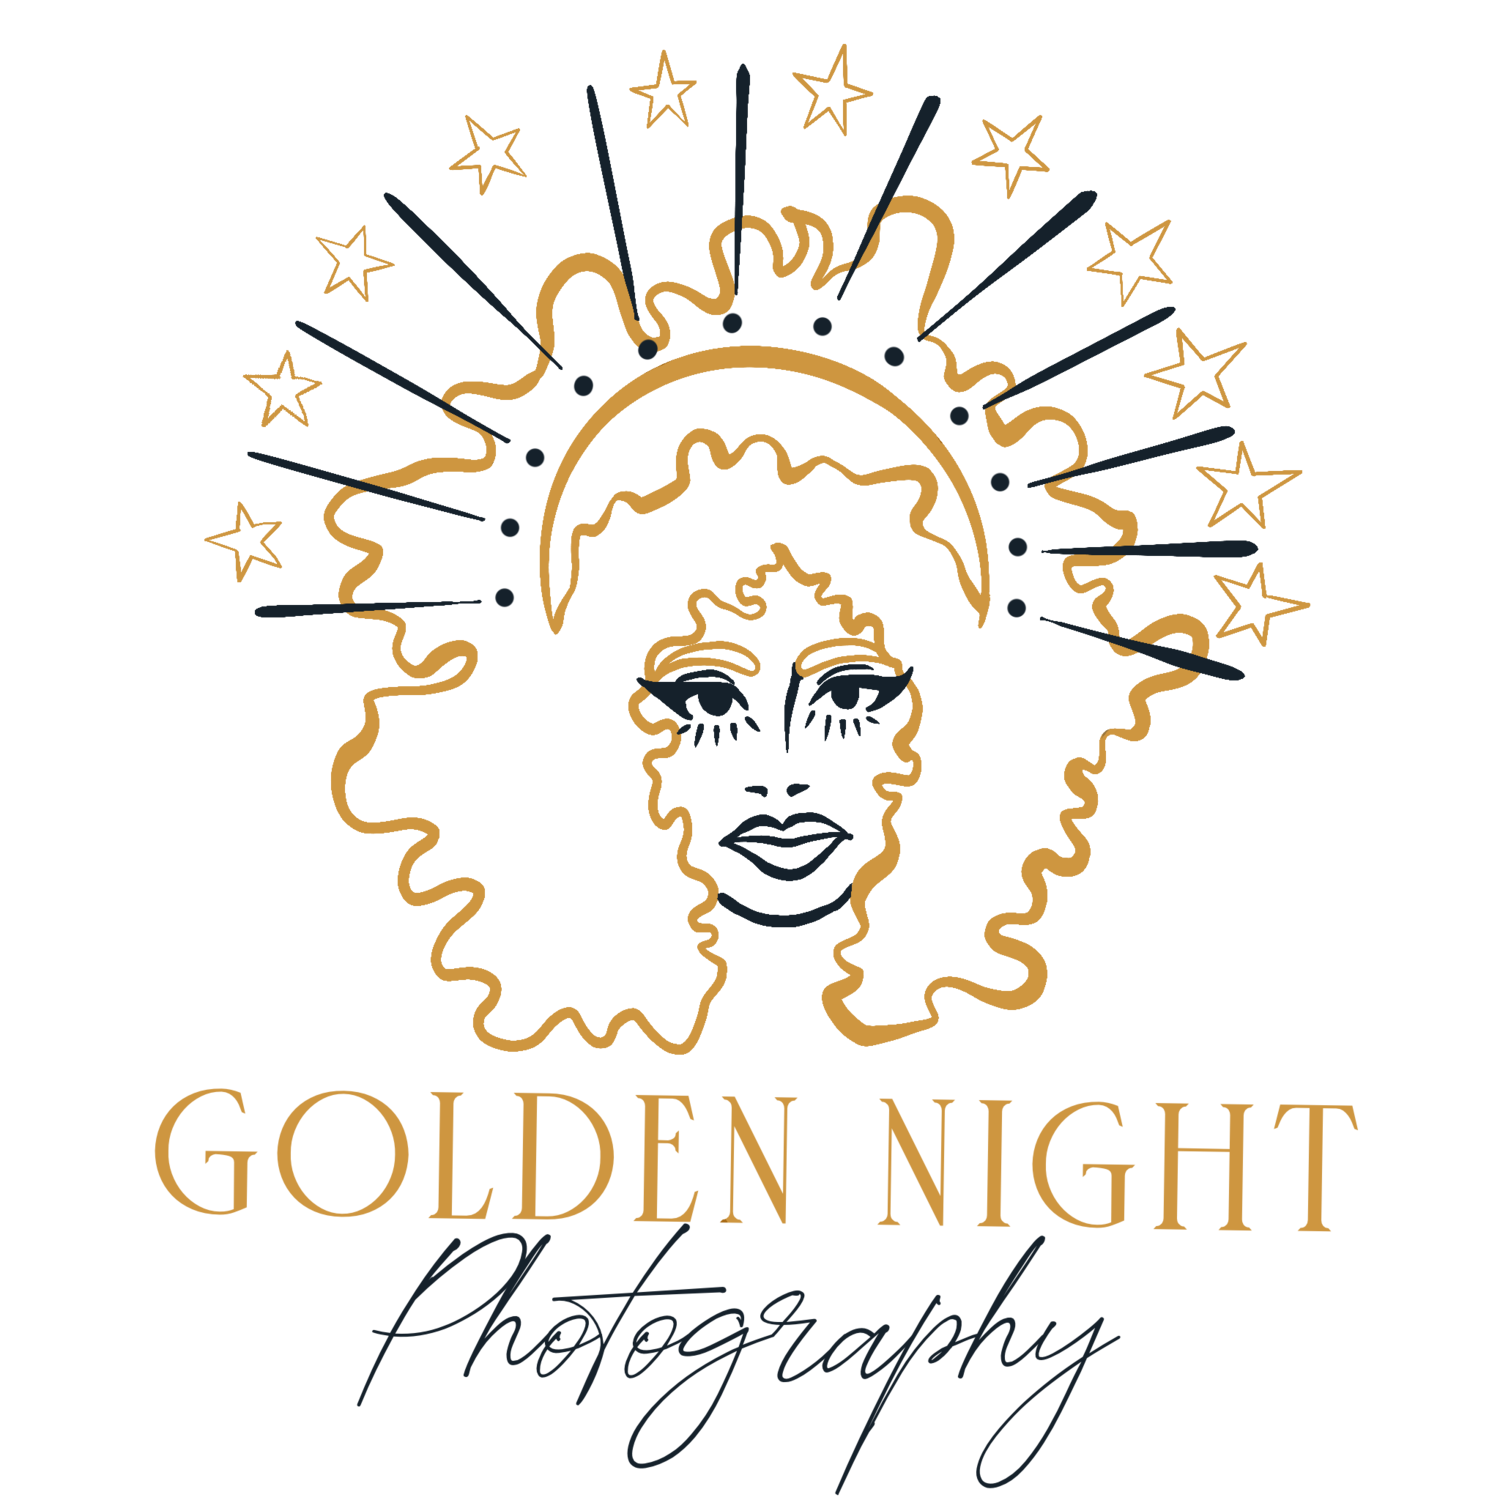 Golden Night Photography